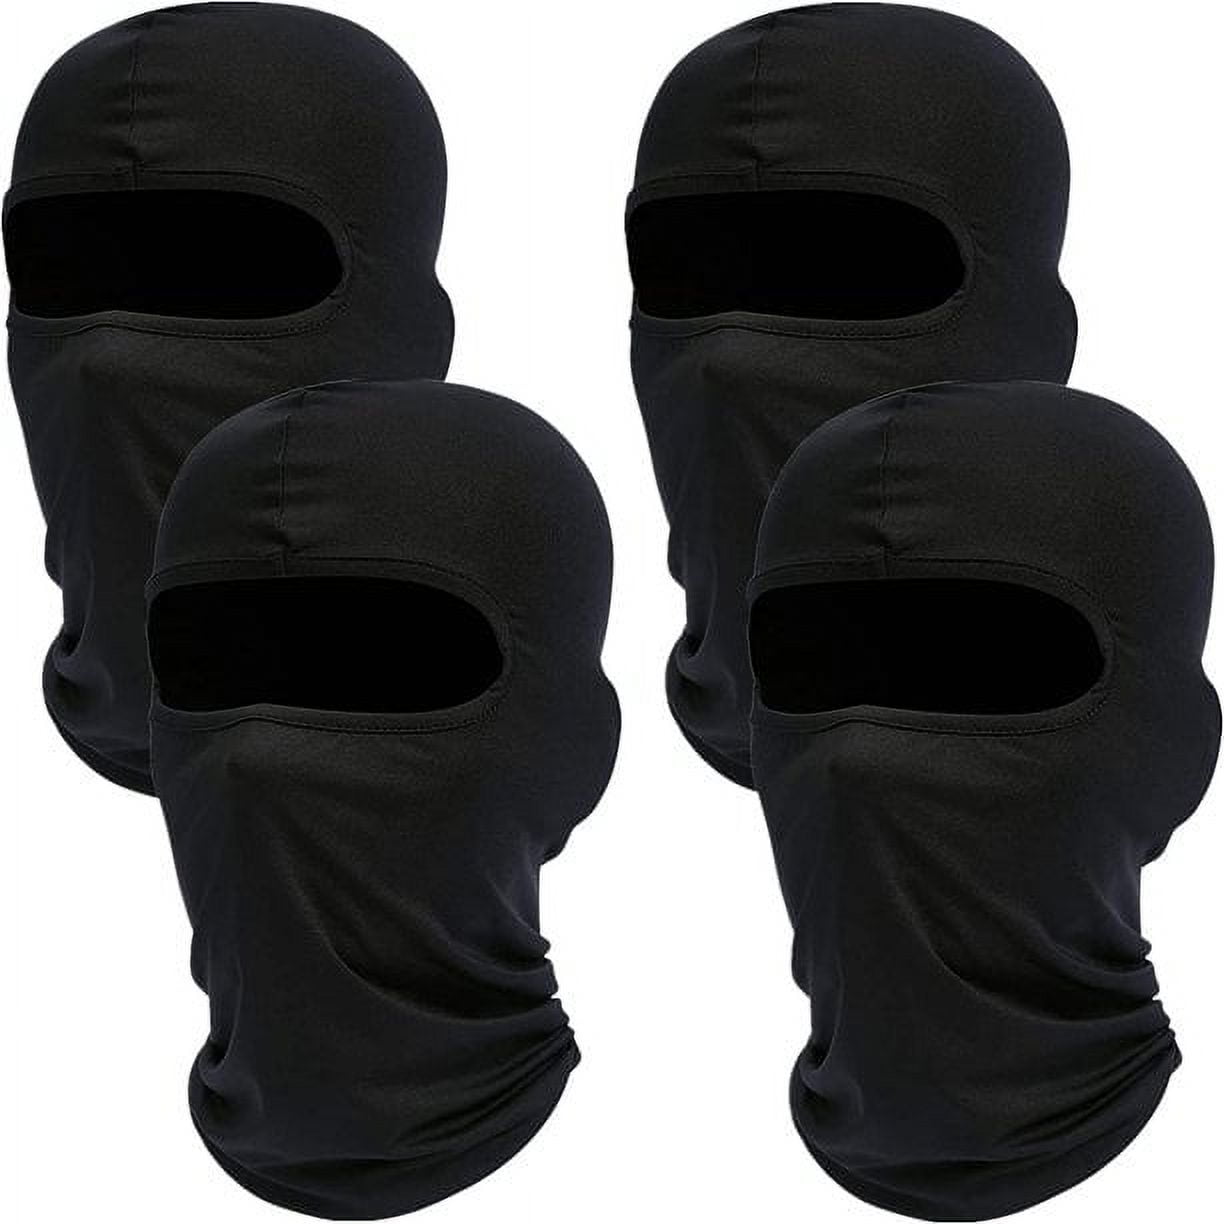 4 Pcs Balaclava Face Ski Mask : Full Face Cover Hood Shiesty Masks for Men  Women 